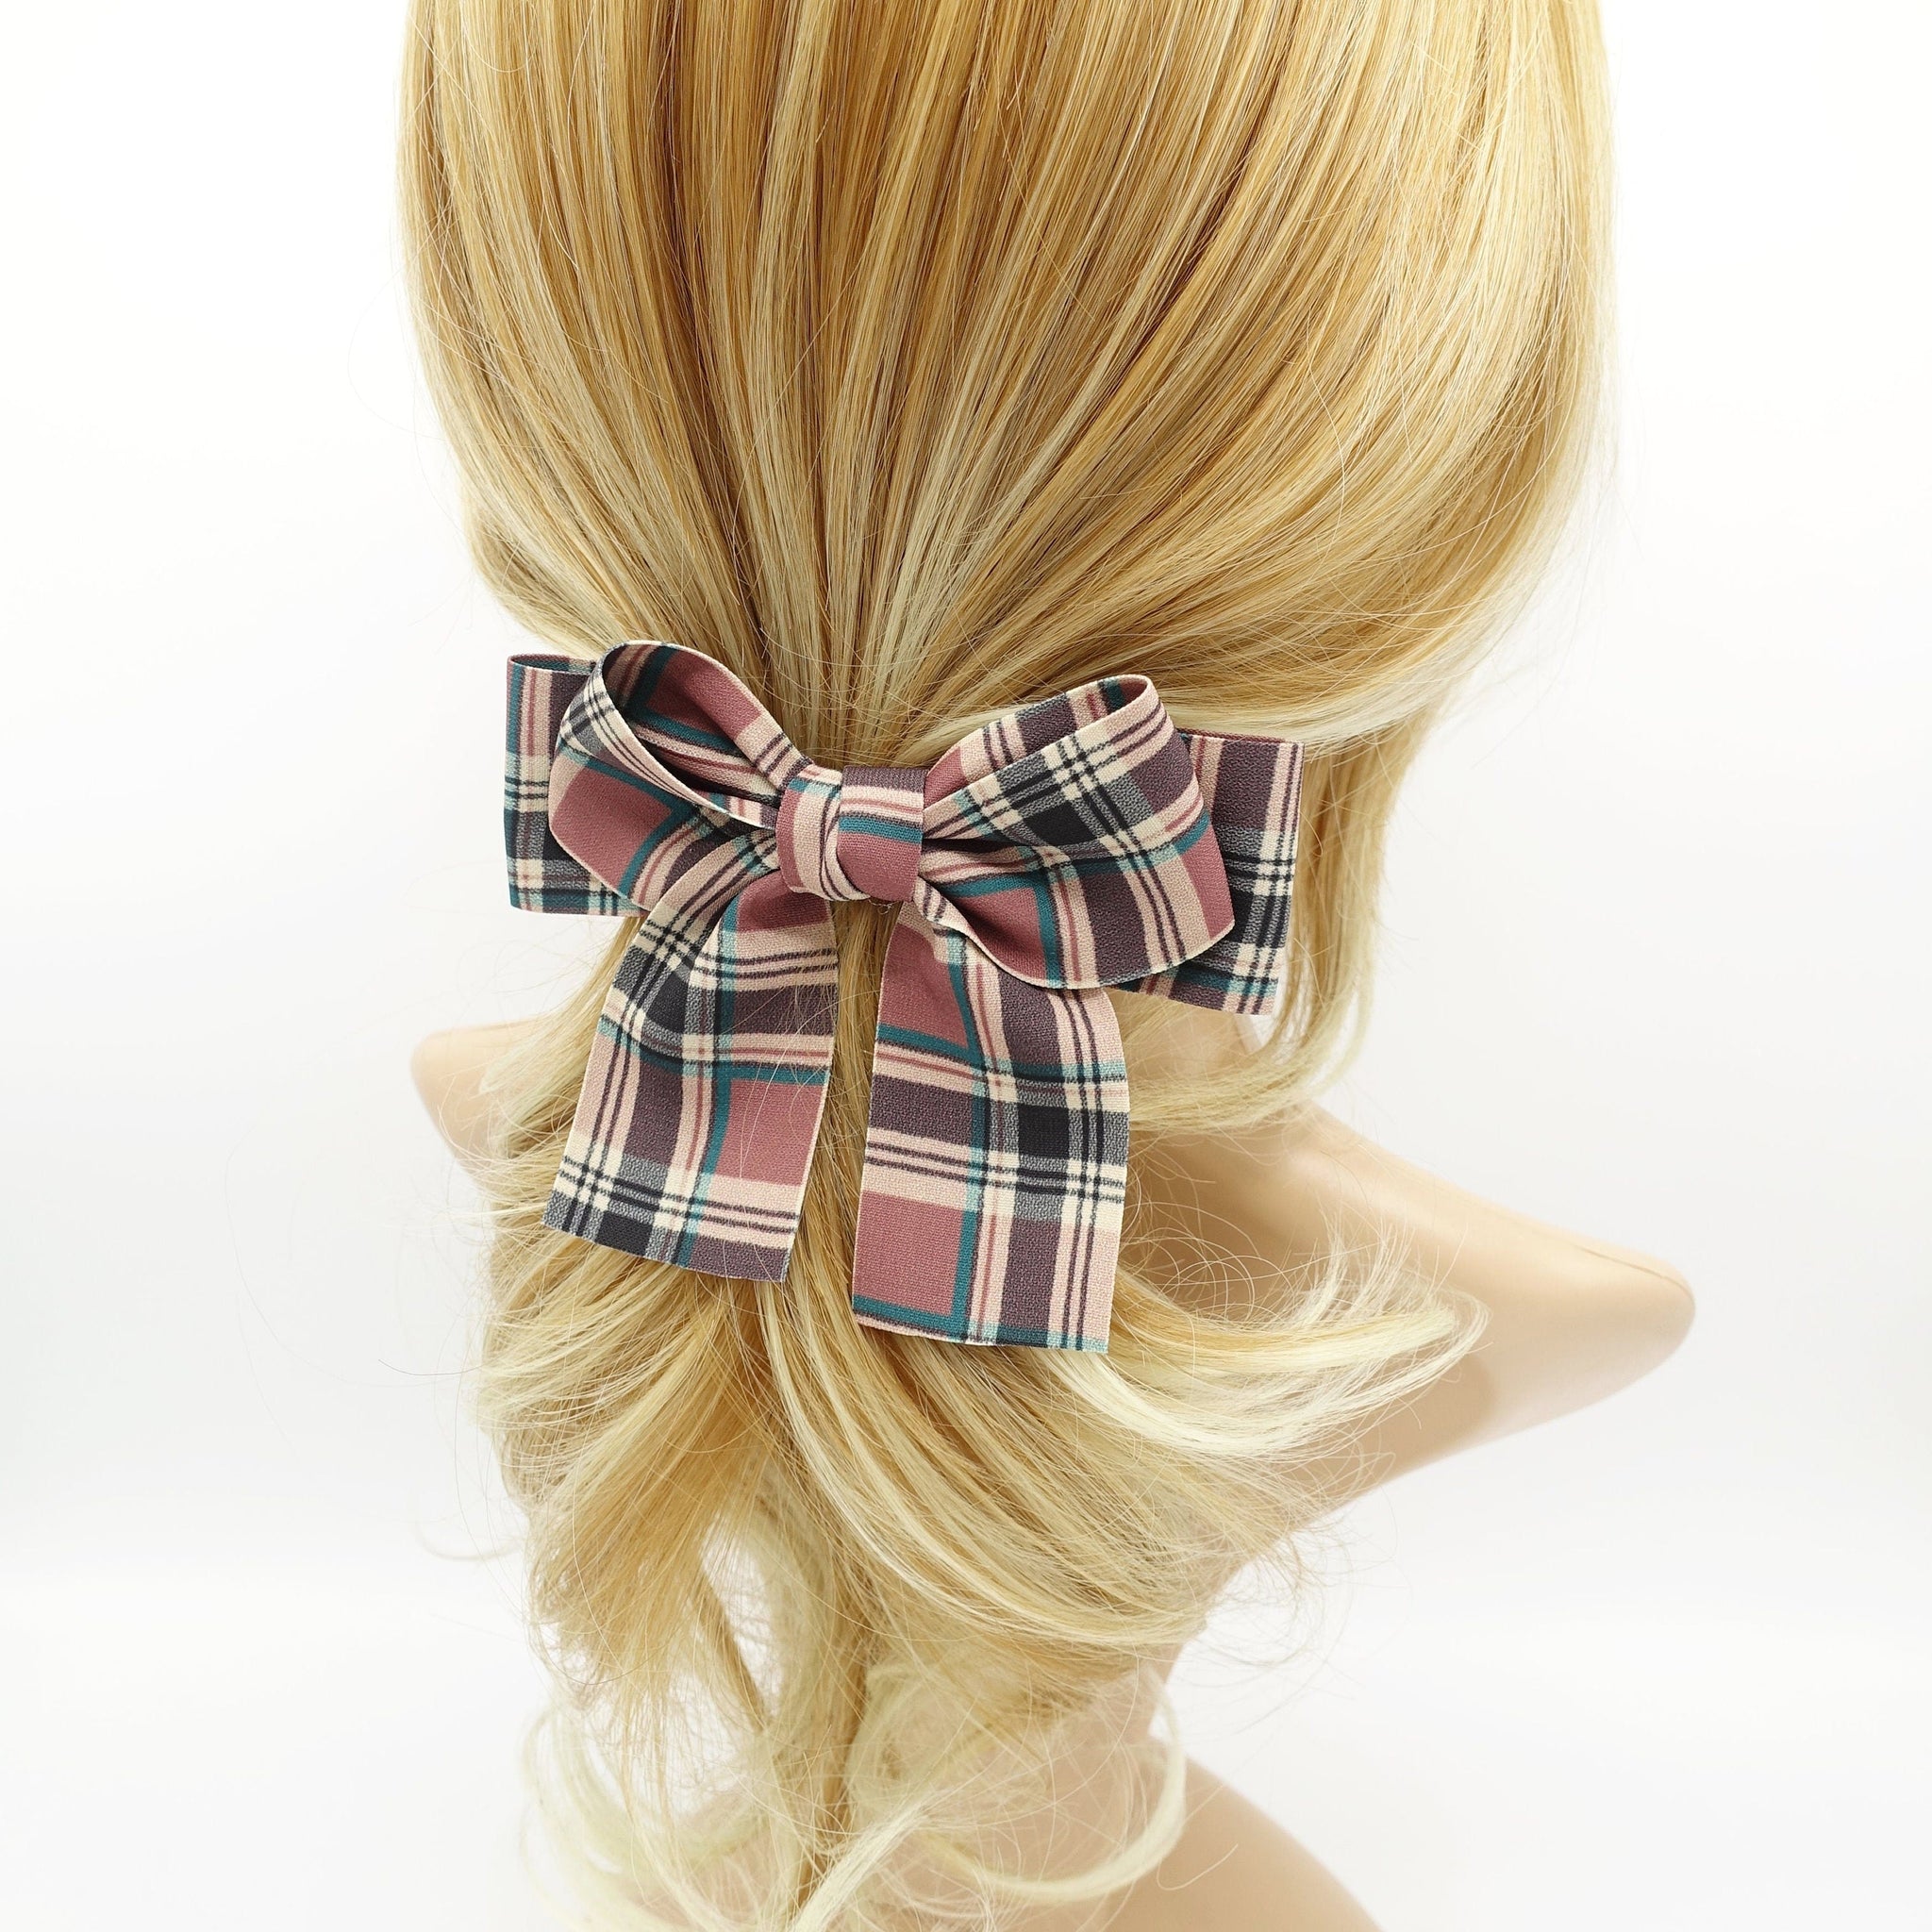 veryshine.com Barrette (Bow) Mauve pink plaid check basic medium bow french barrette casual women hair accessory